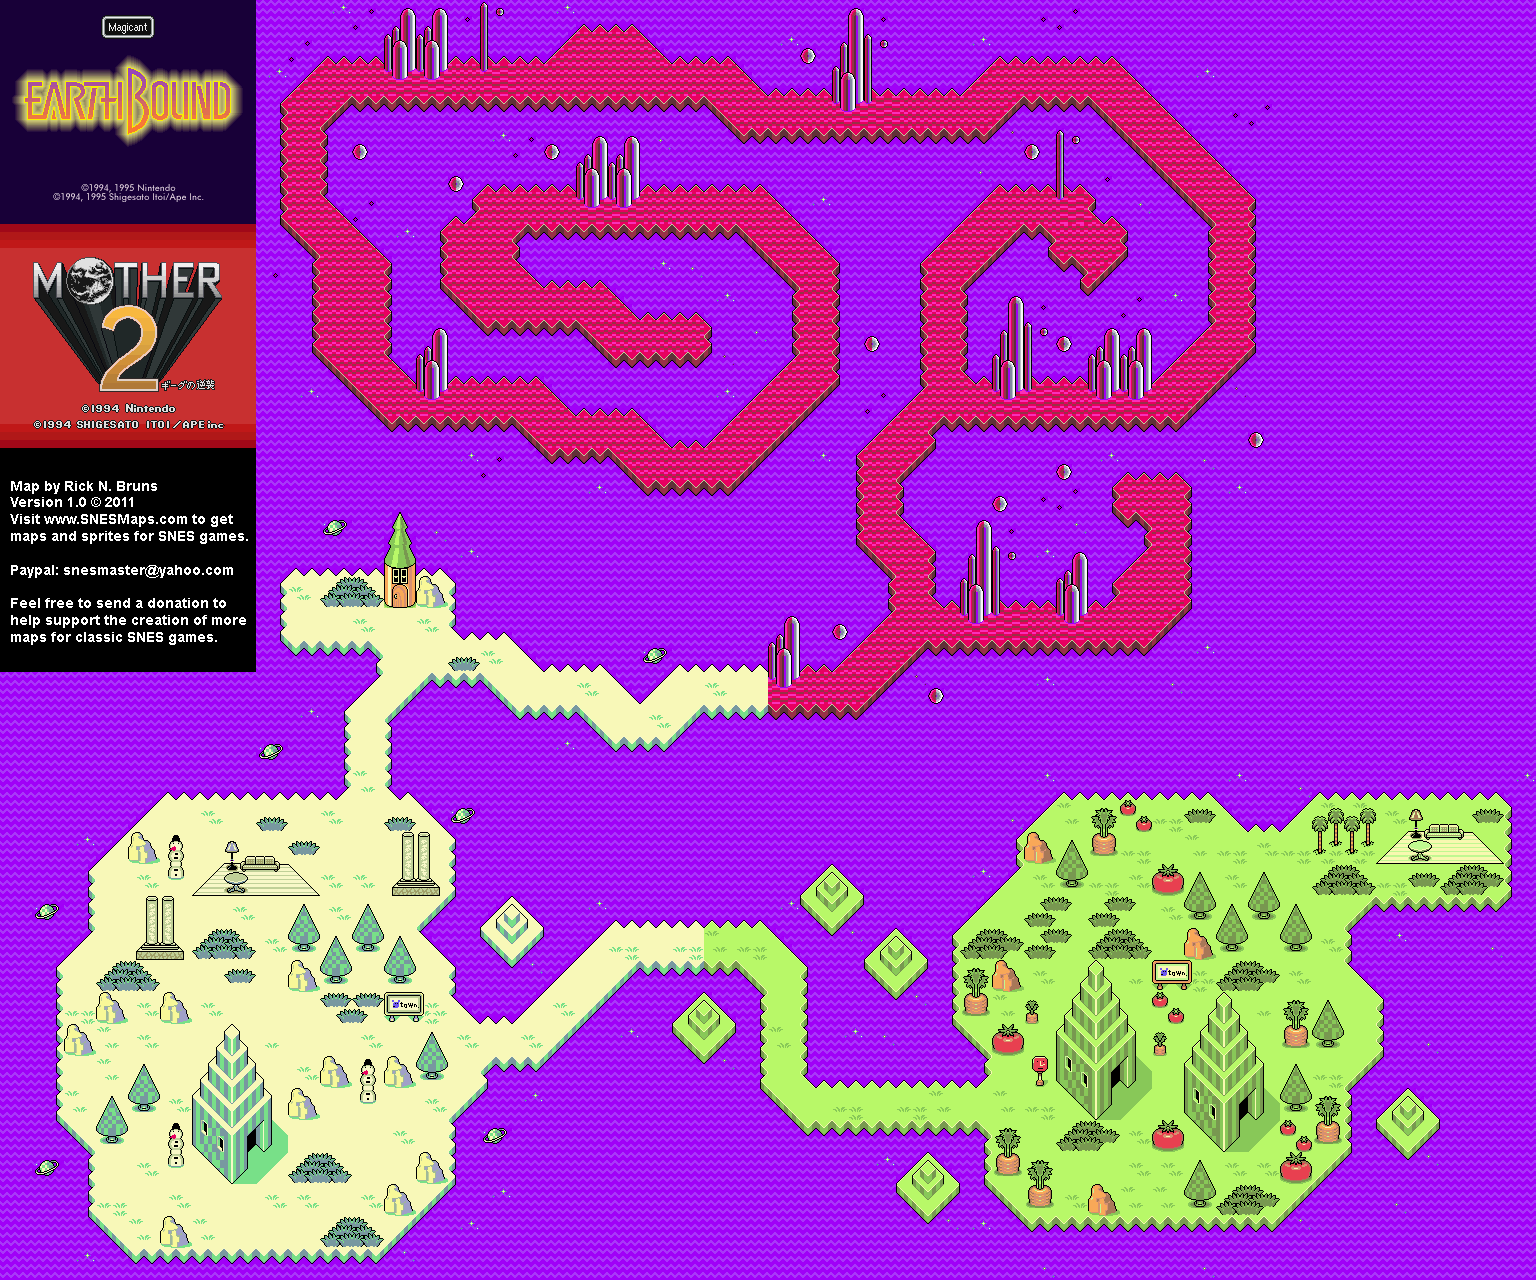 EarthBound (Mother 2) - Magicant Super Nintendo SNES Map BG